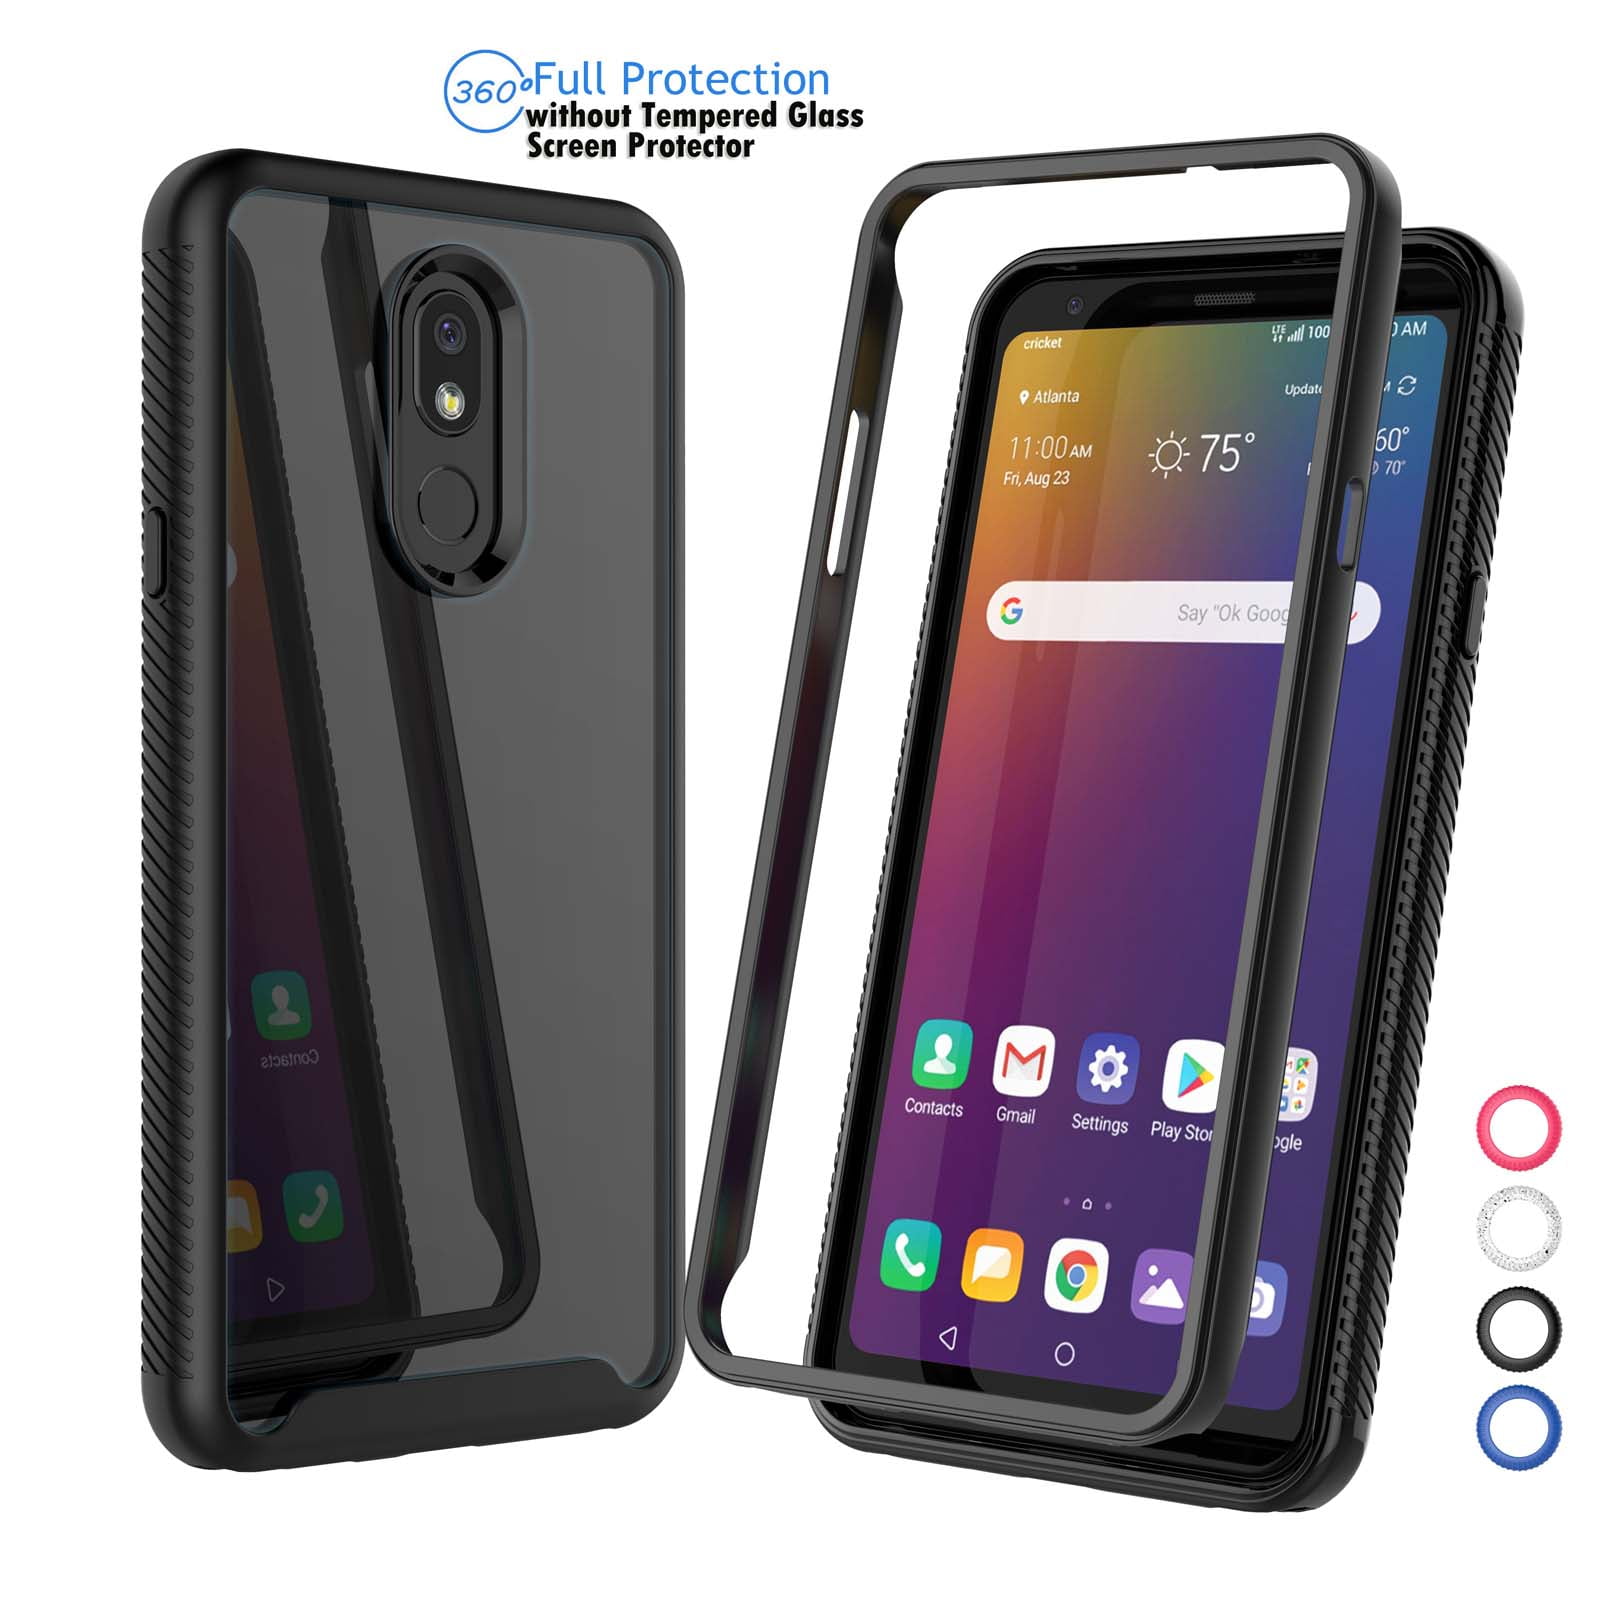 LG Stylo 5 Case, Phone Case for 2019 LG Stylo 5 Plus, Njjex Full-Body Rugged Transparent Clear Back Bumper Case Cover for LG Stylus 5 / Stylus 5 Plus 6.2" 2019 Released -Black